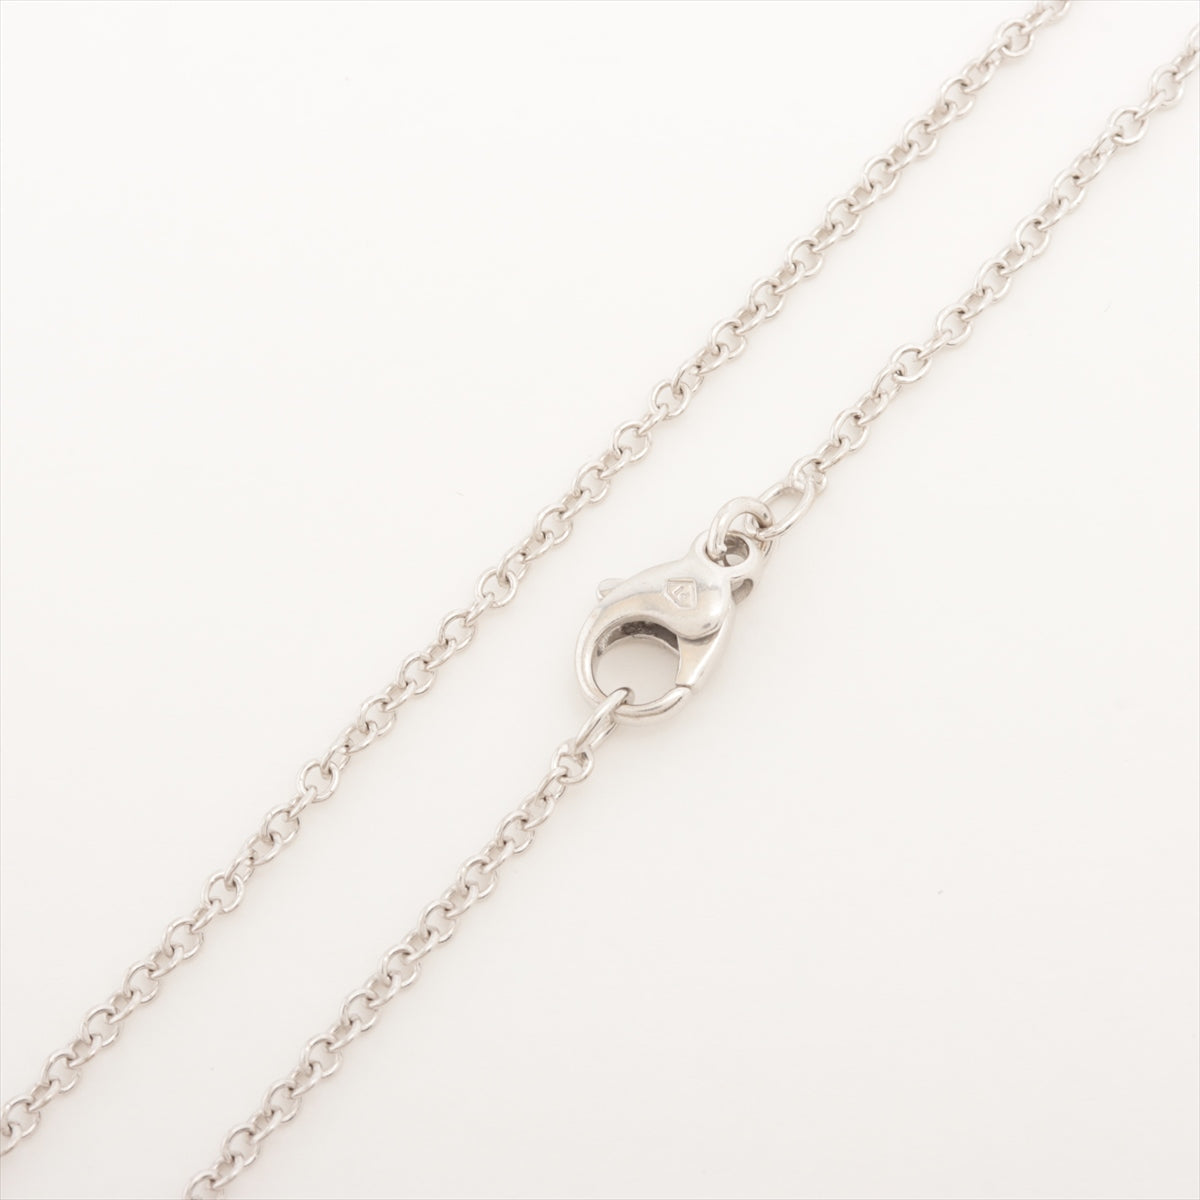 Piaget hearts Diamond Necklace 750(WG) 8.3g